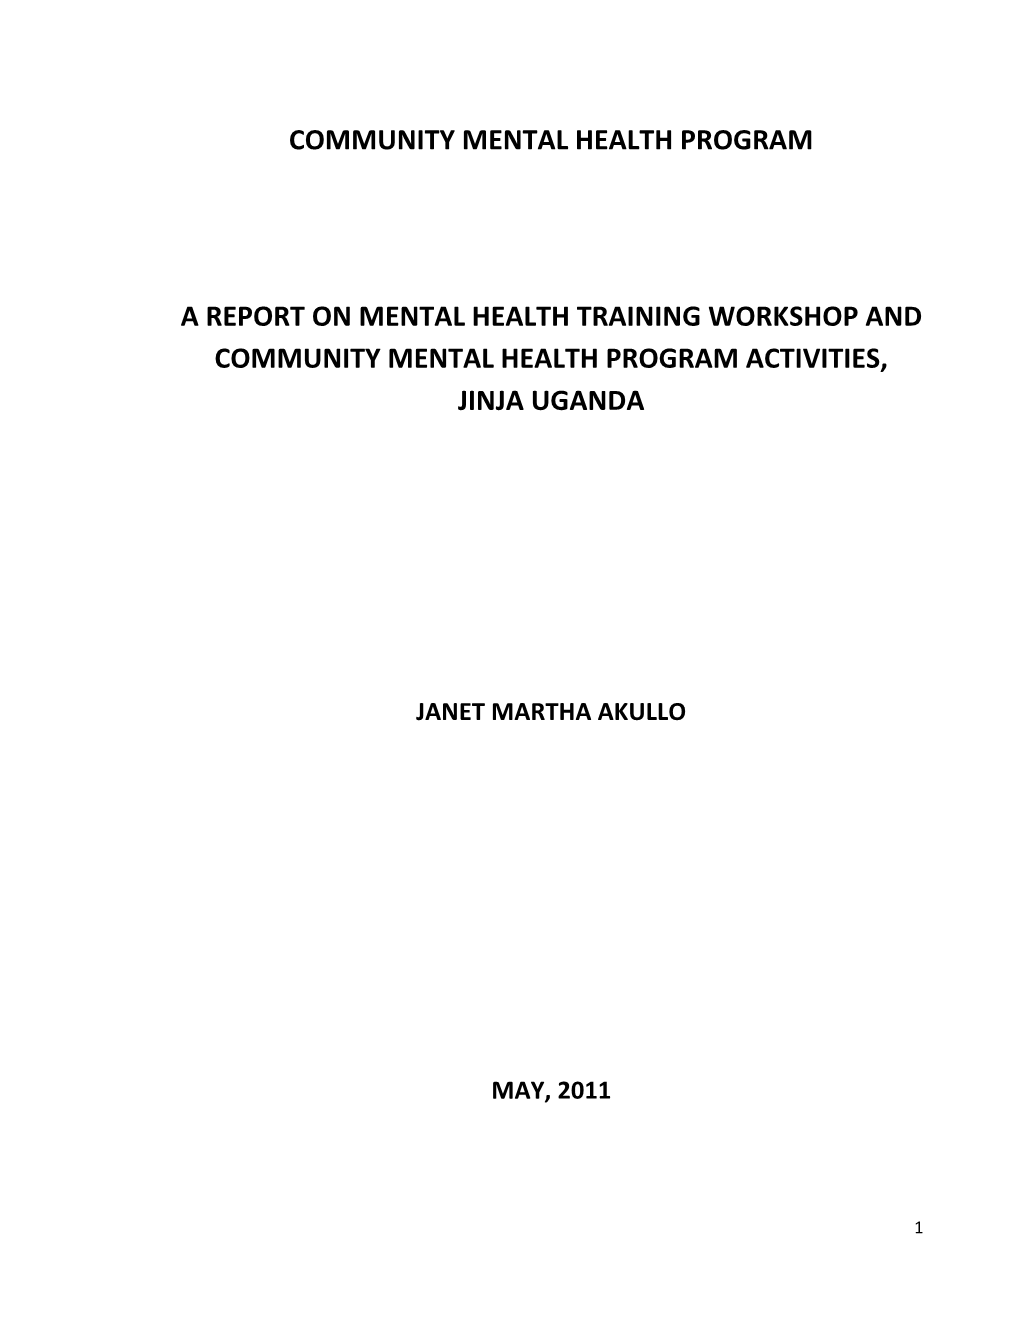 Community Mental Health Program Activites, Jinja